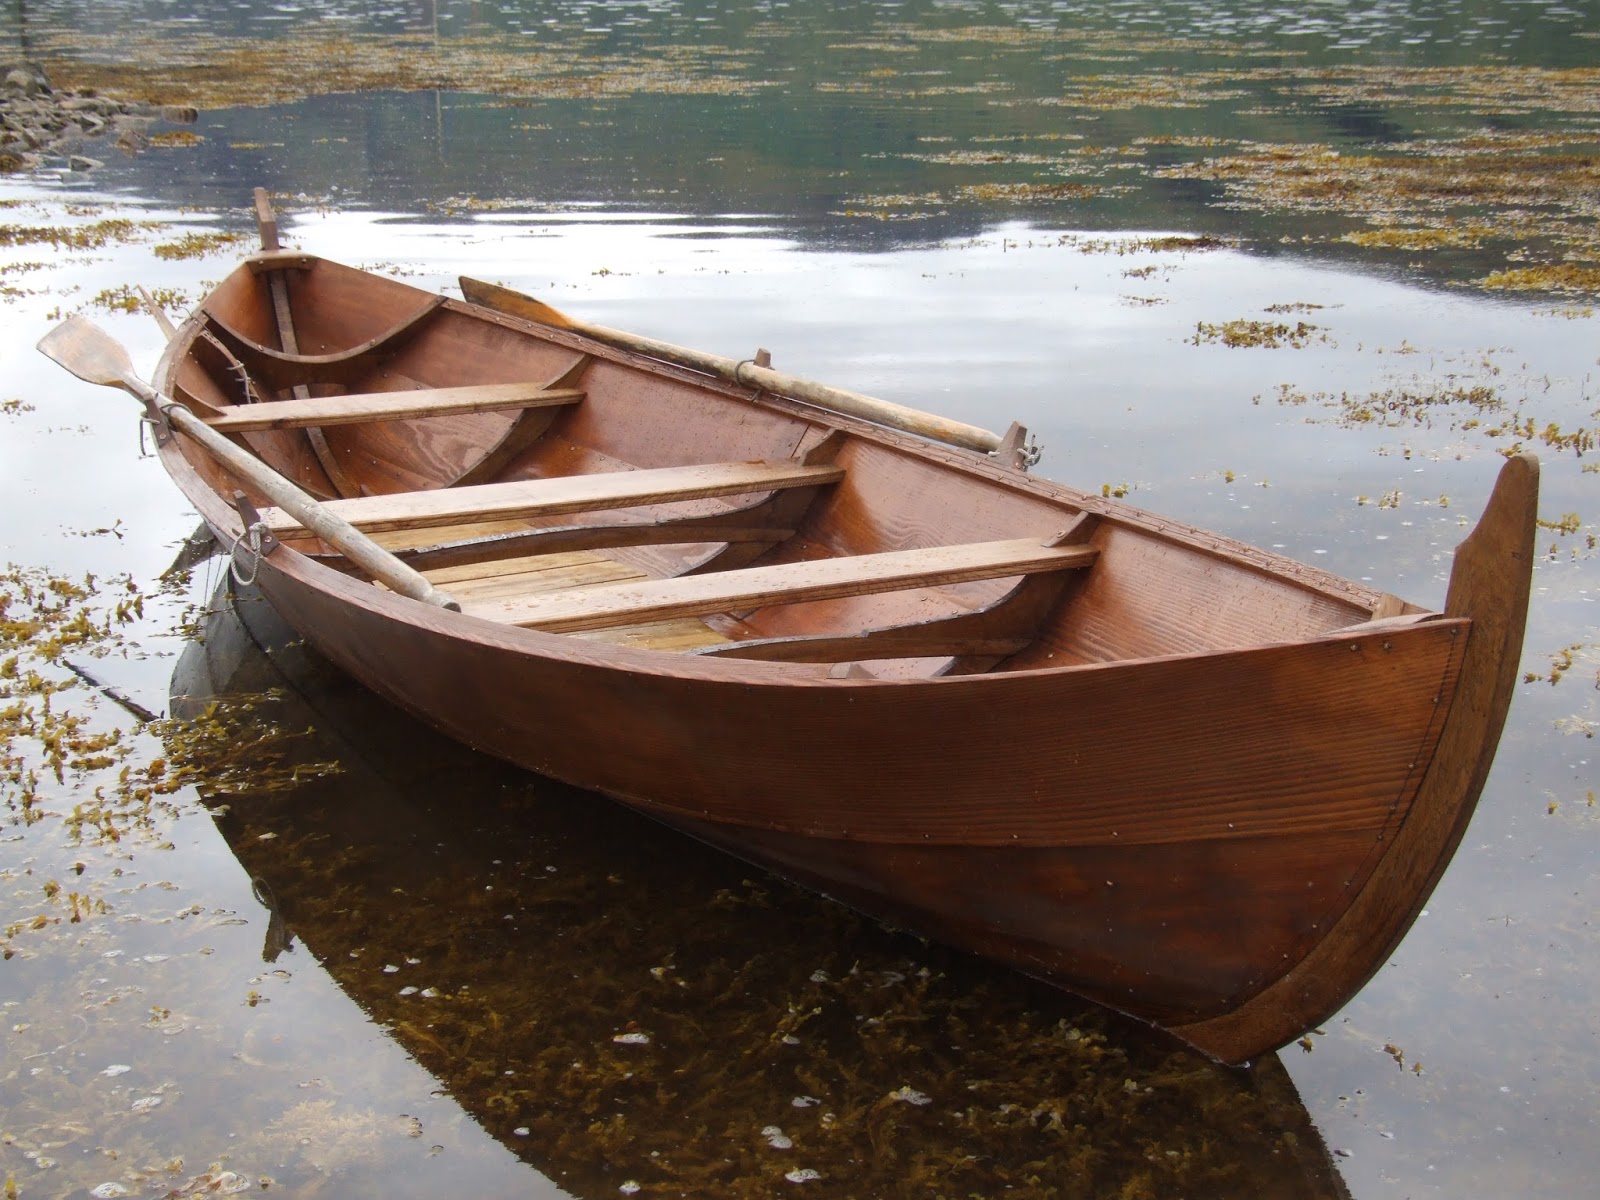 viking boats of ullapool: on reflection